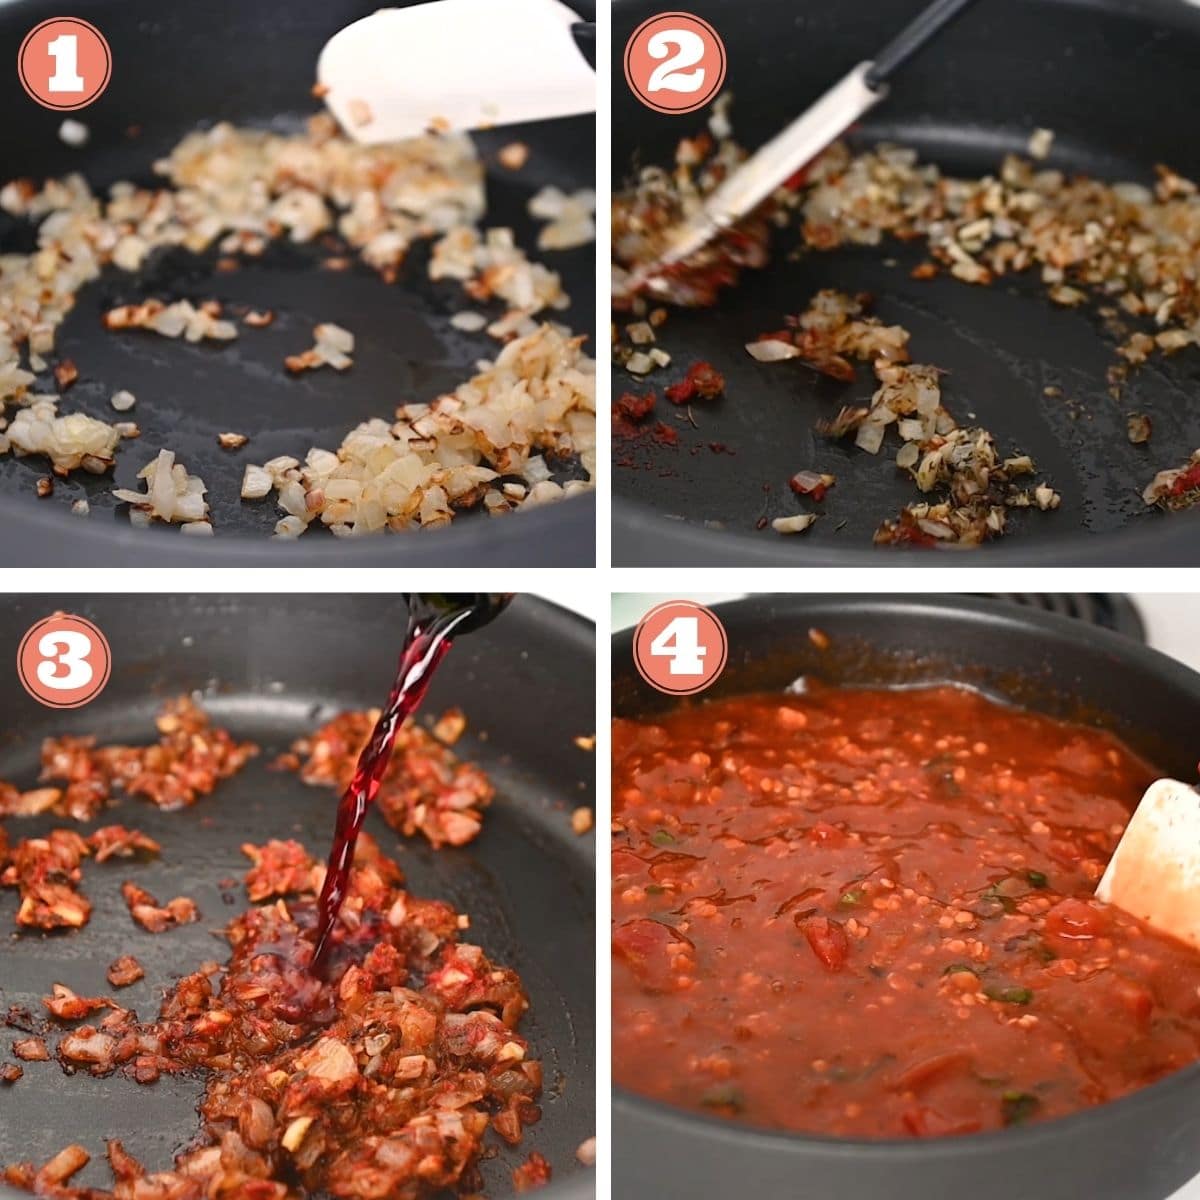 Steps 1 through 4 to make red lentil pasta